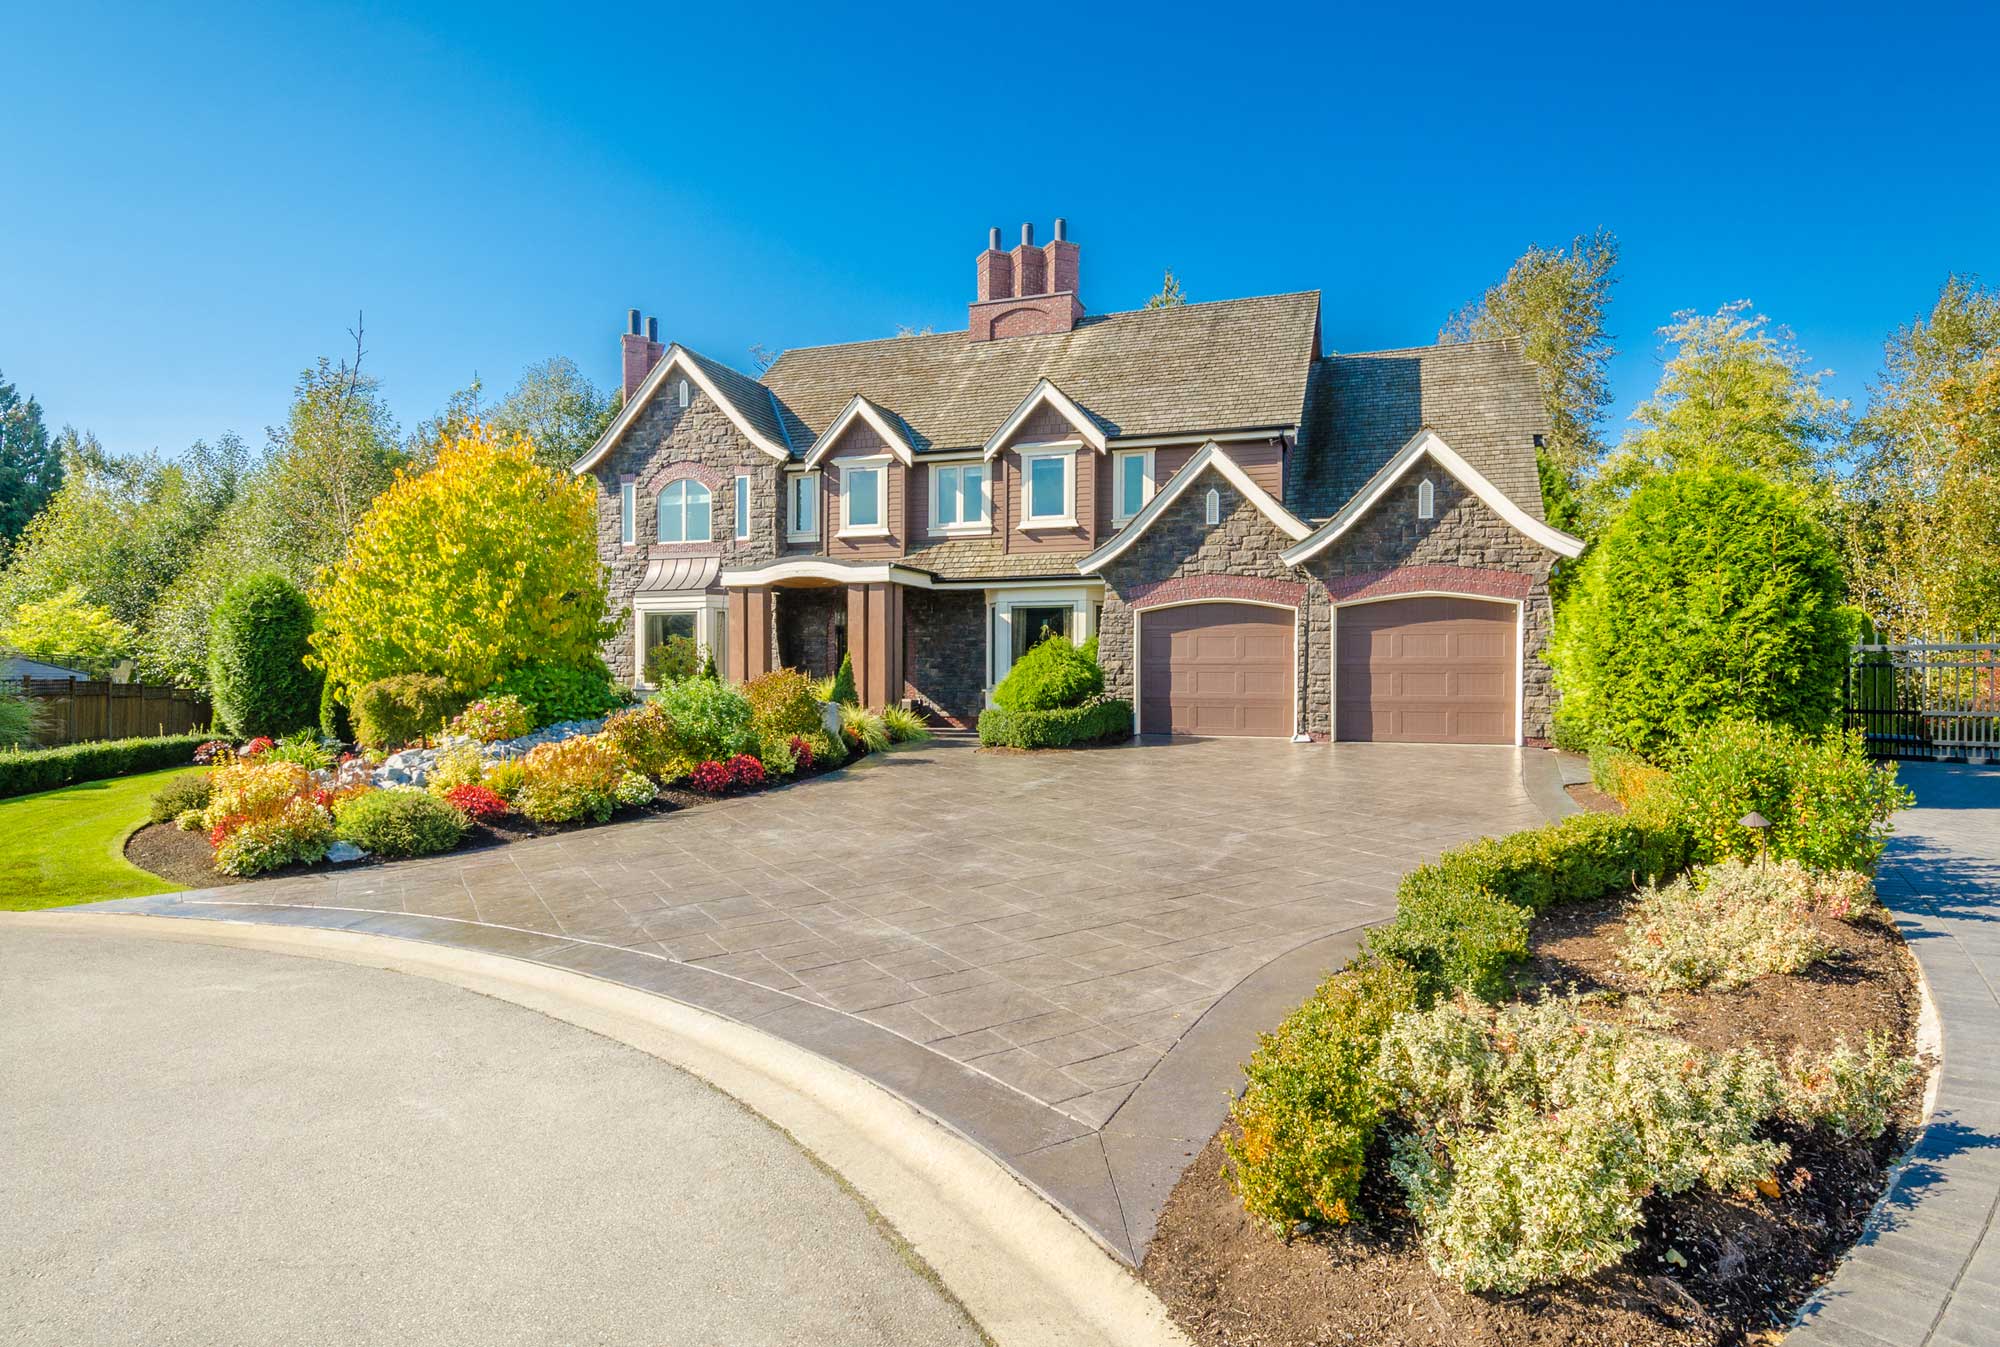 Single family homes for sale in the Denver area tops $500K